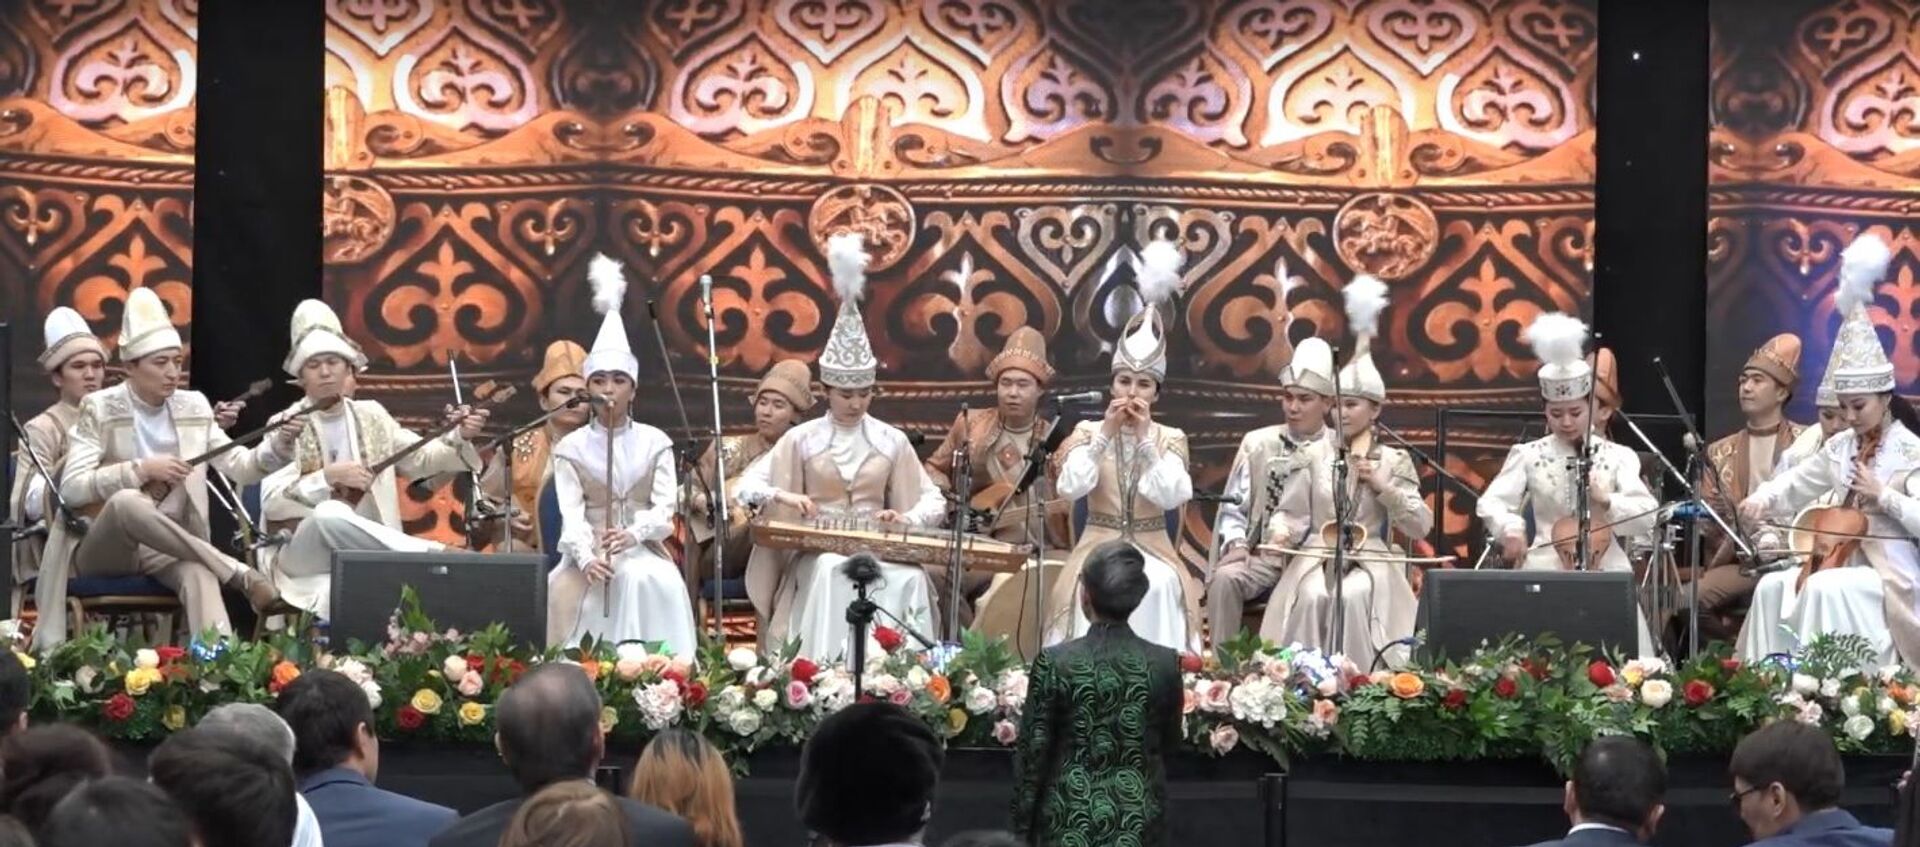 Казахстанские музыканты установили рекорд - Sputnik Узбекистан, 1920, 19.02.2020